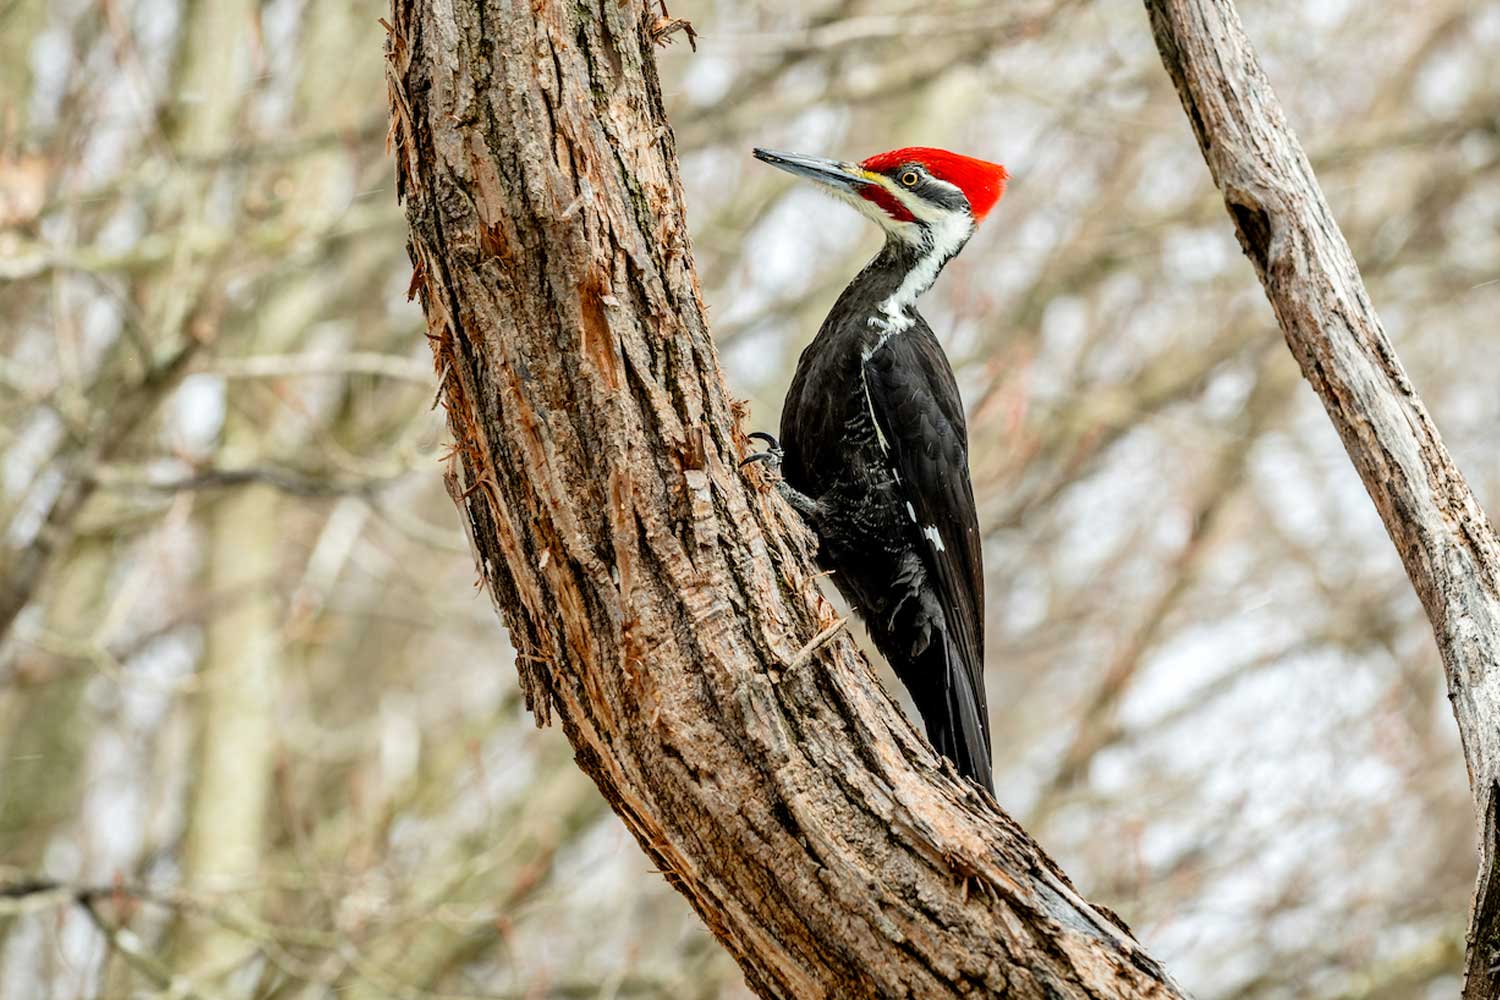 Pileated woodpecker on a tree.